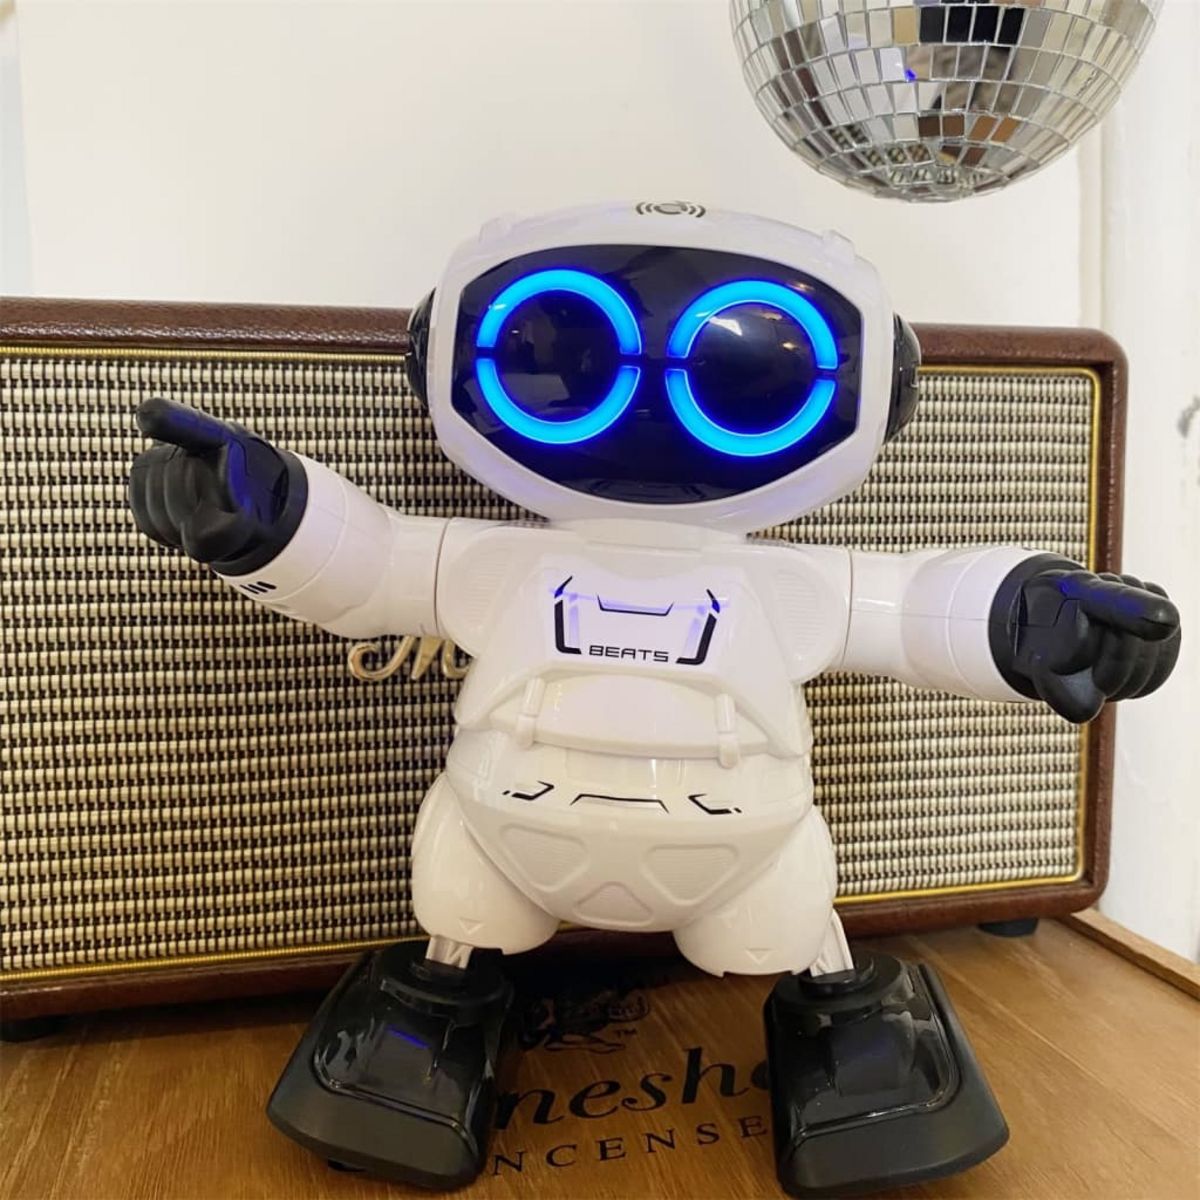 SILVERLIT Silverlit Robot jouet Robo Beats pas cher 